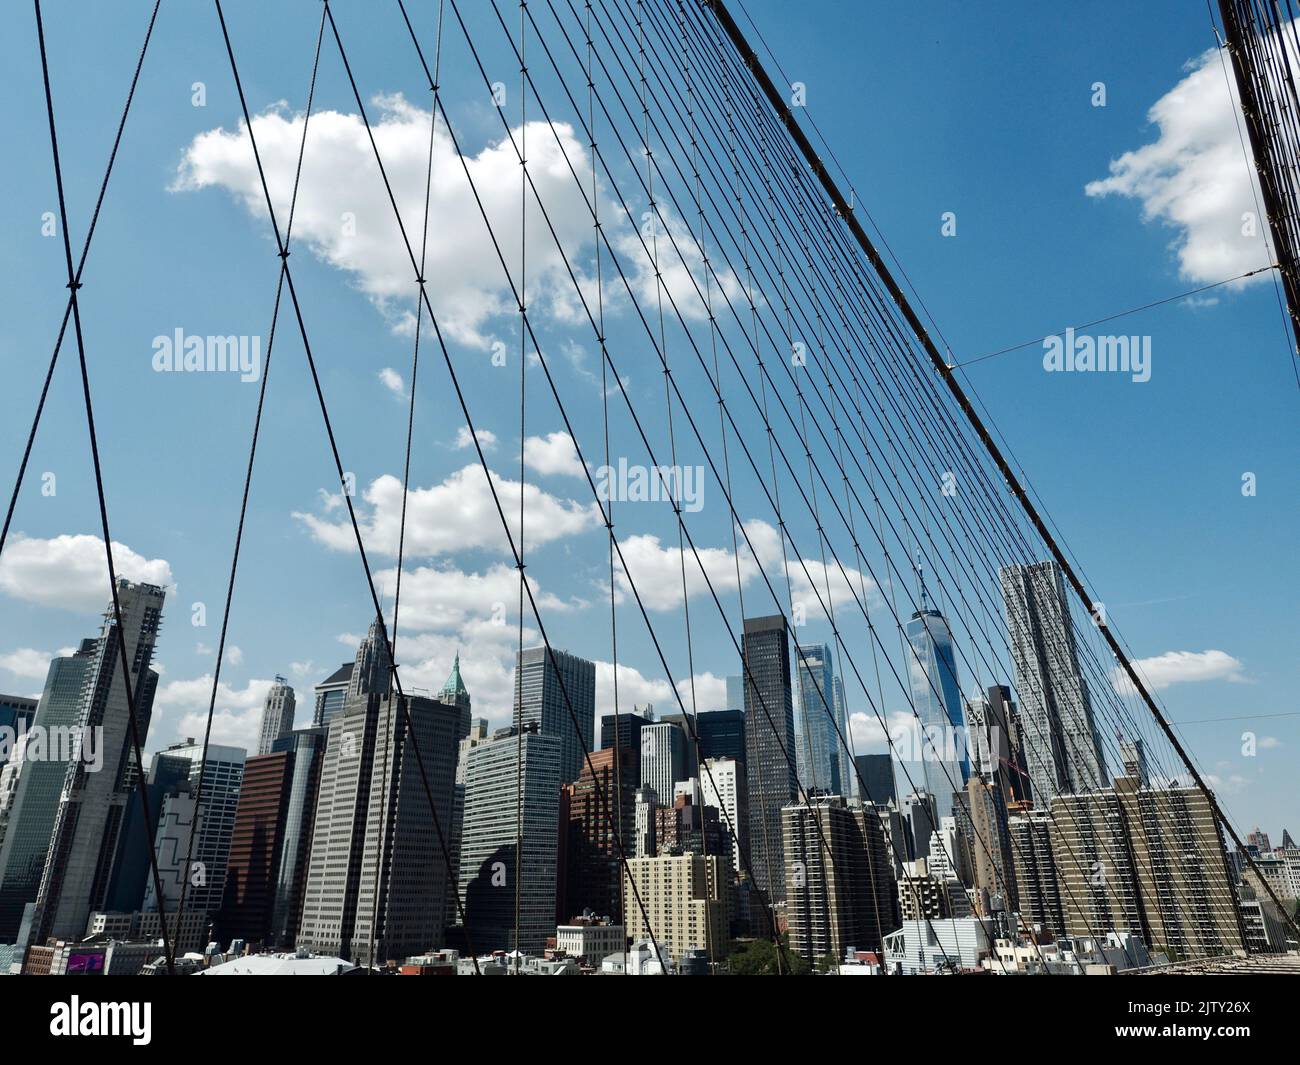 Dal ponte di Brooklyn Stock Photo